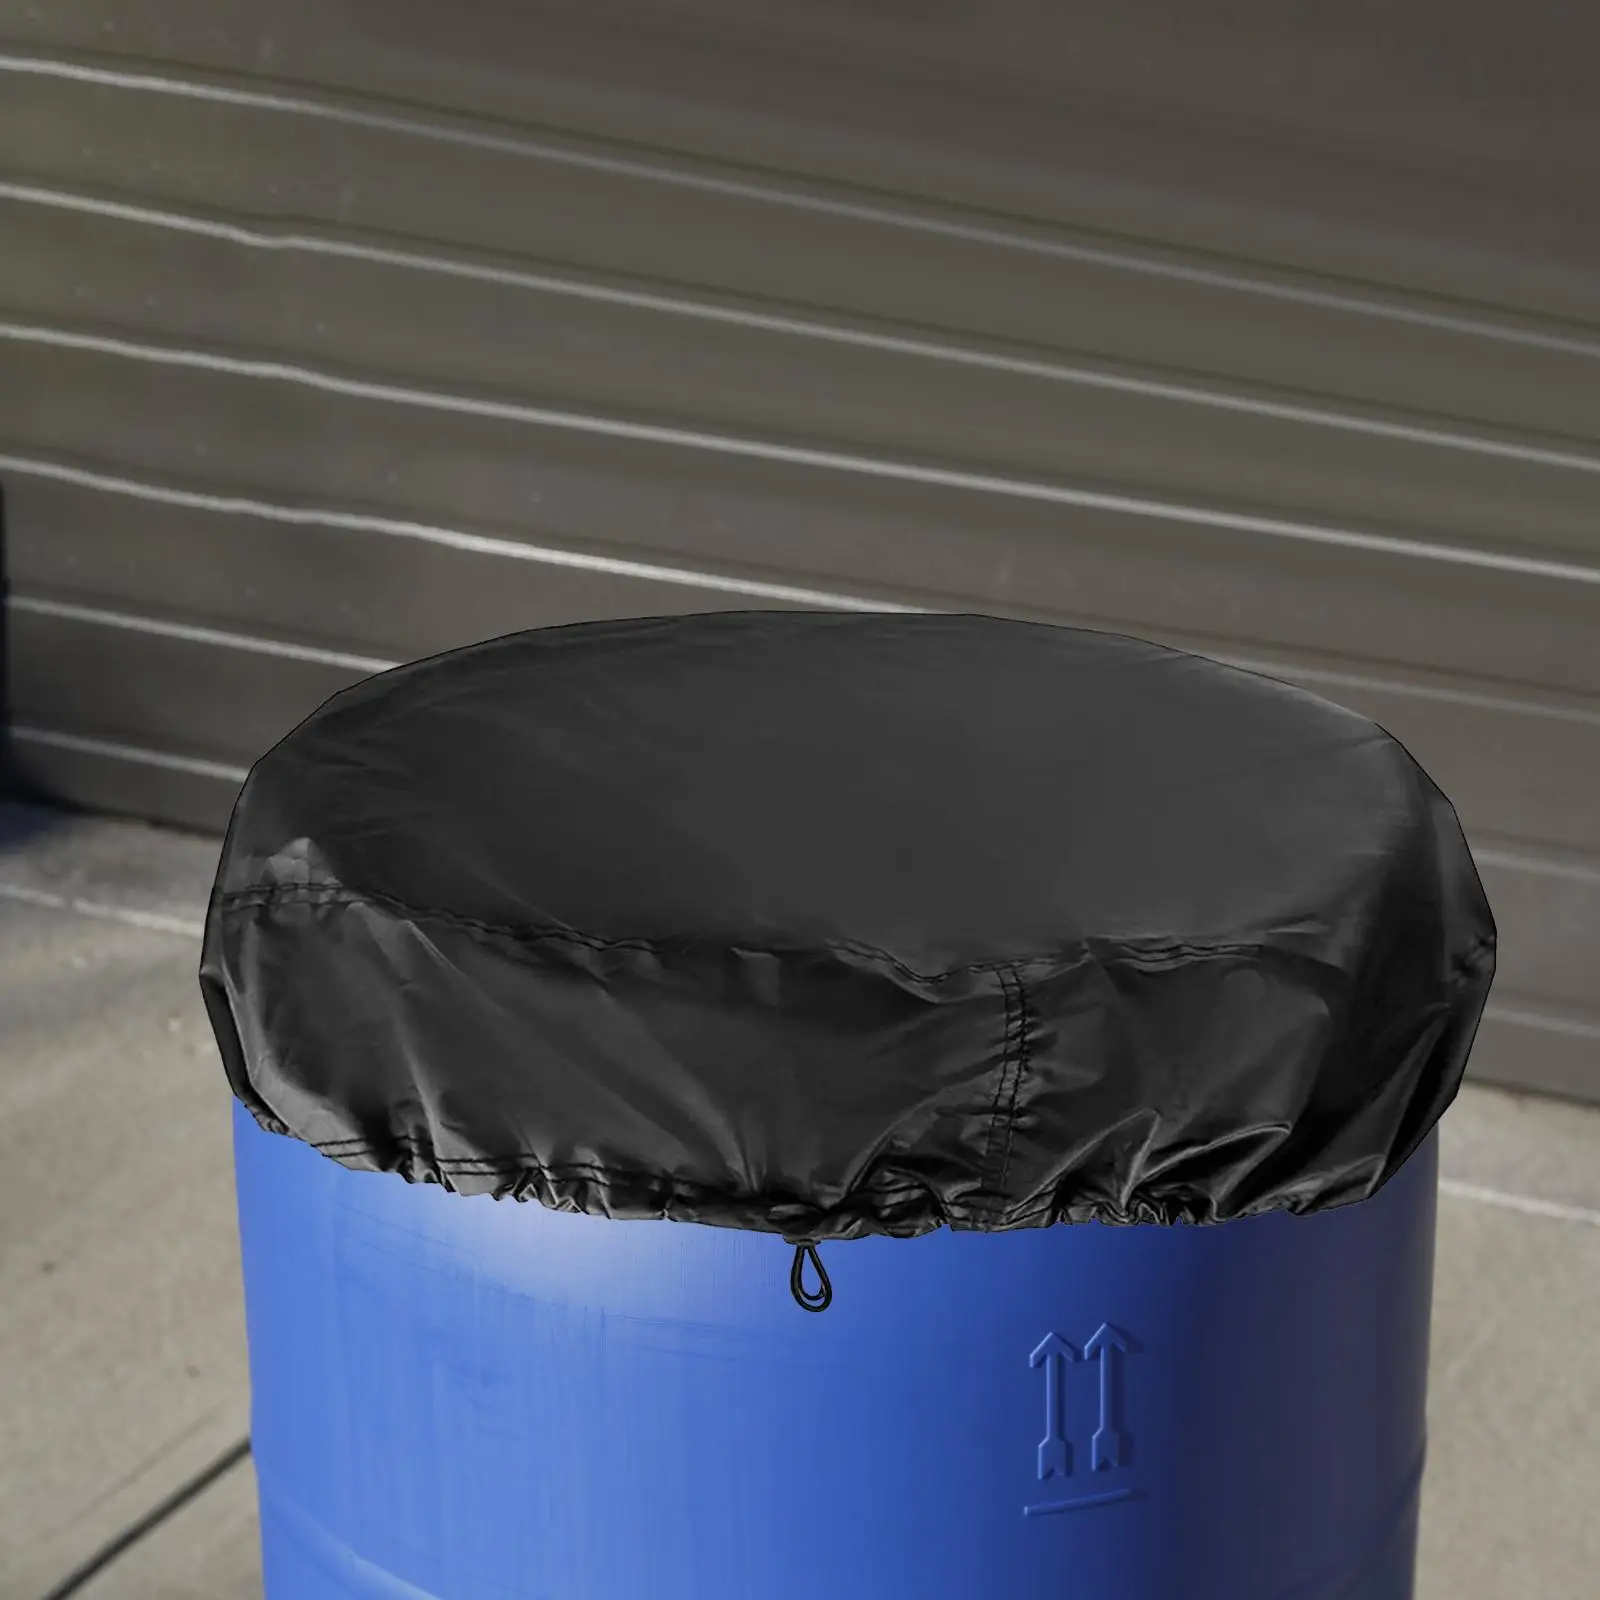 Rain Bucket Cover Gallon Drum Cover Protector 65cm Cover for Rain Barrels